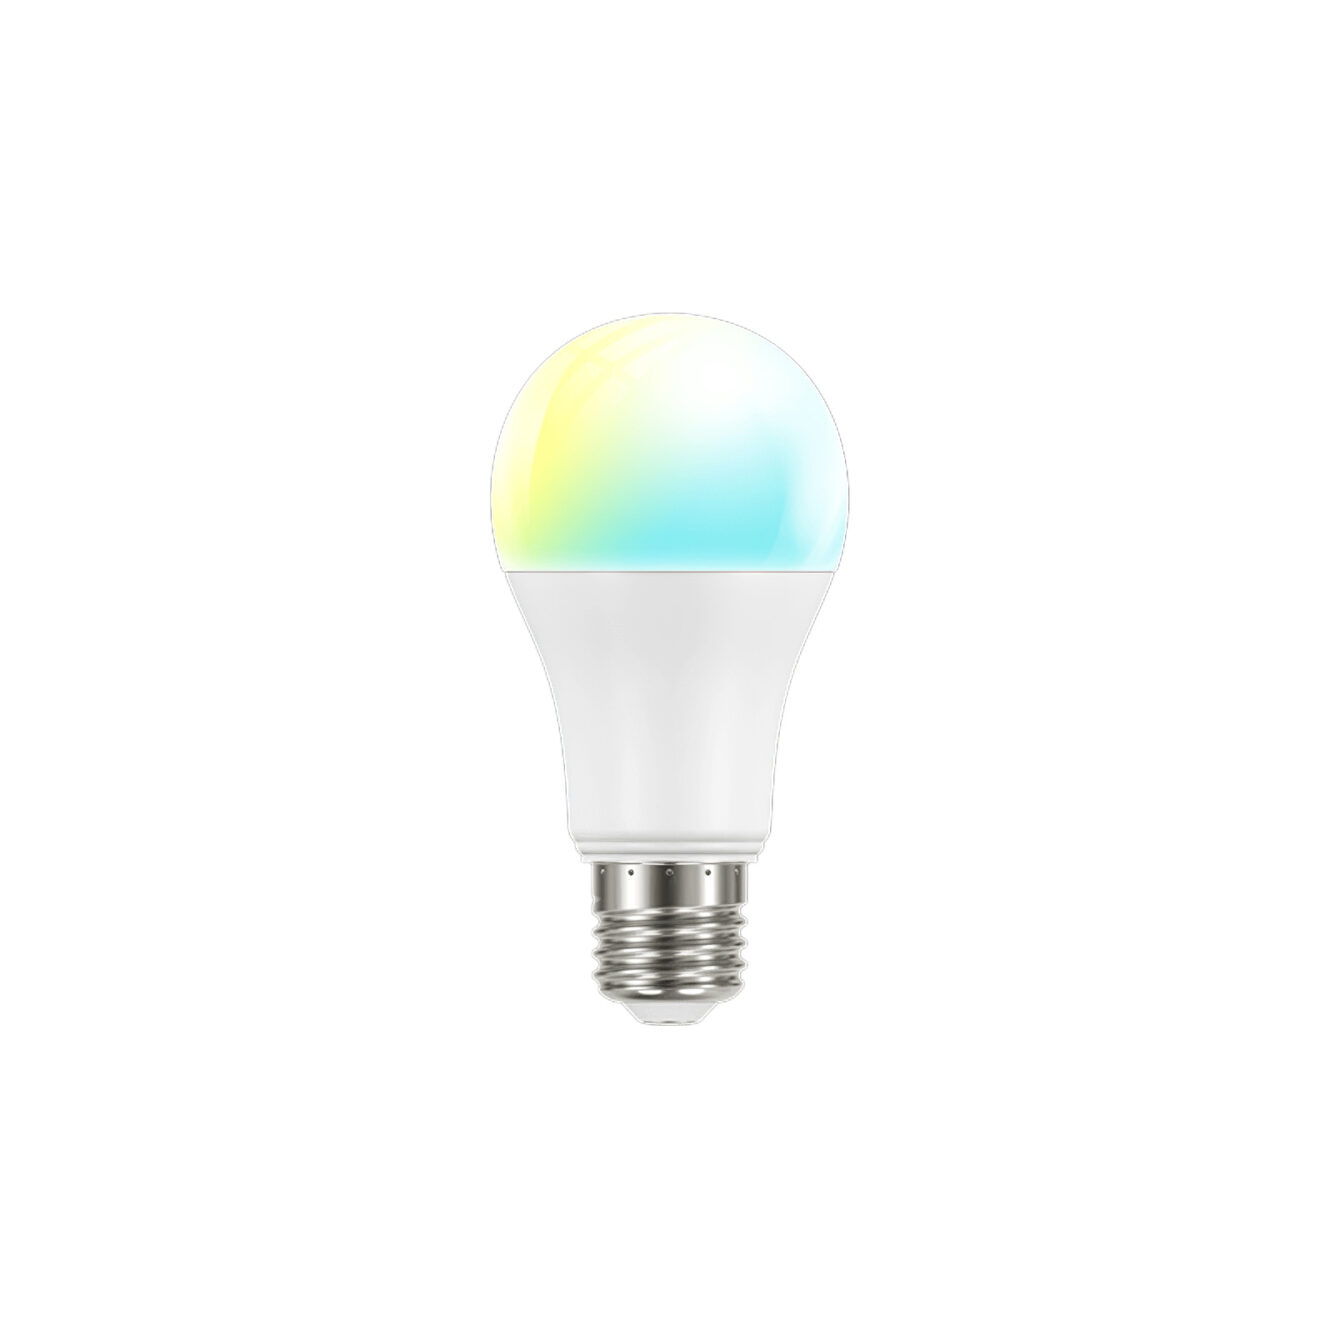 LED Bulb 6 - Intelligente, dimmbare Glühbirne von Aeotec | Radiamo